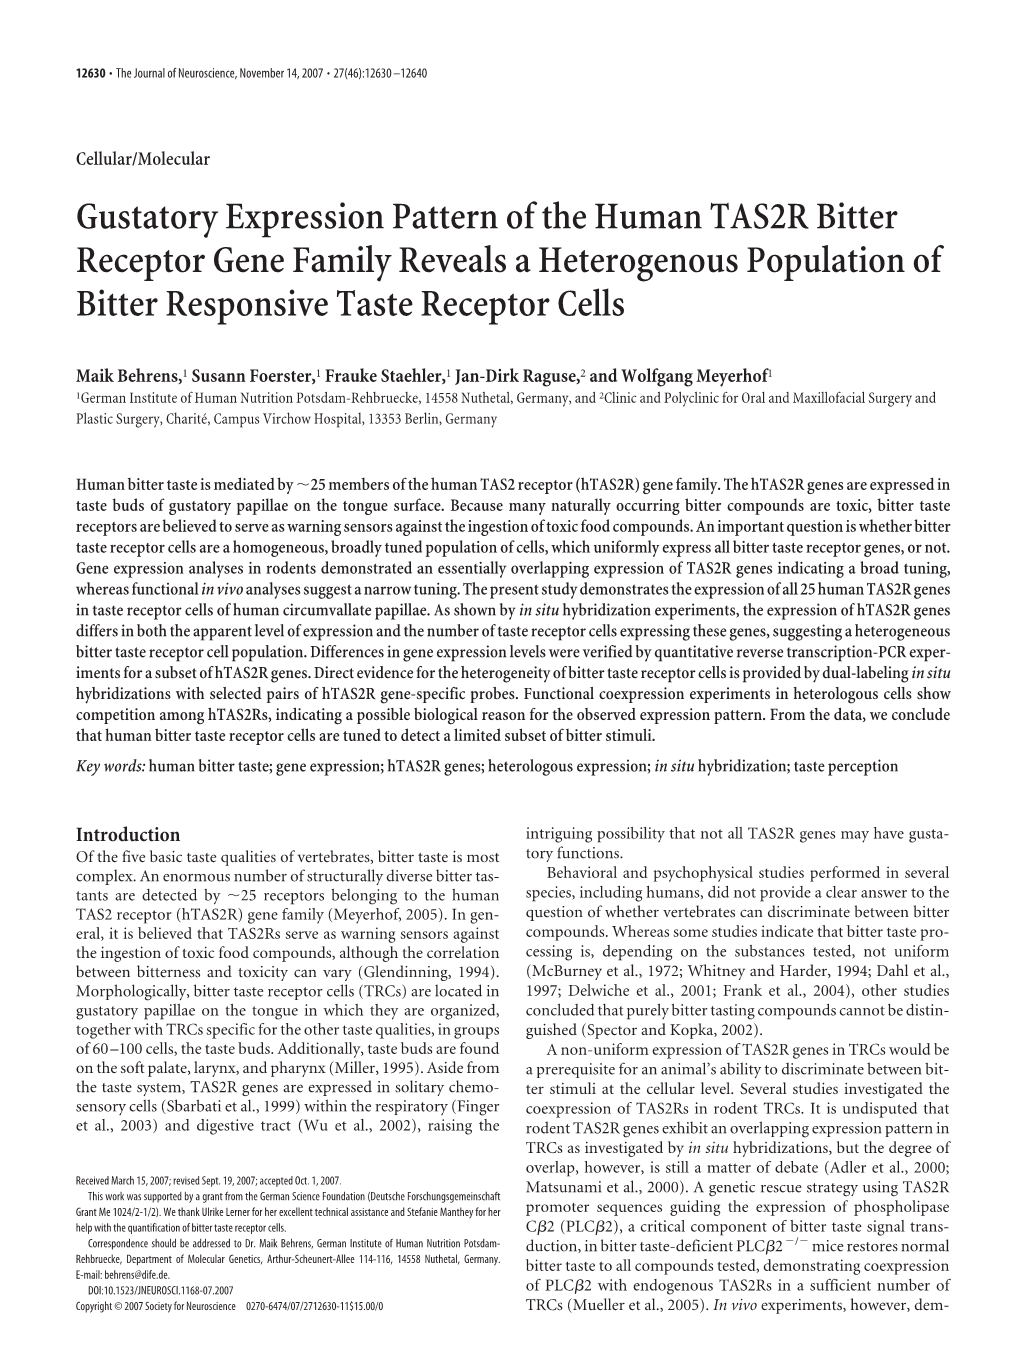 Gustatory Expression Pattern of the Human TAS2R Bitter Receptor Gene Family Reveals a Heterogenous Population of Bitter Responsive Taste Receptor Cells